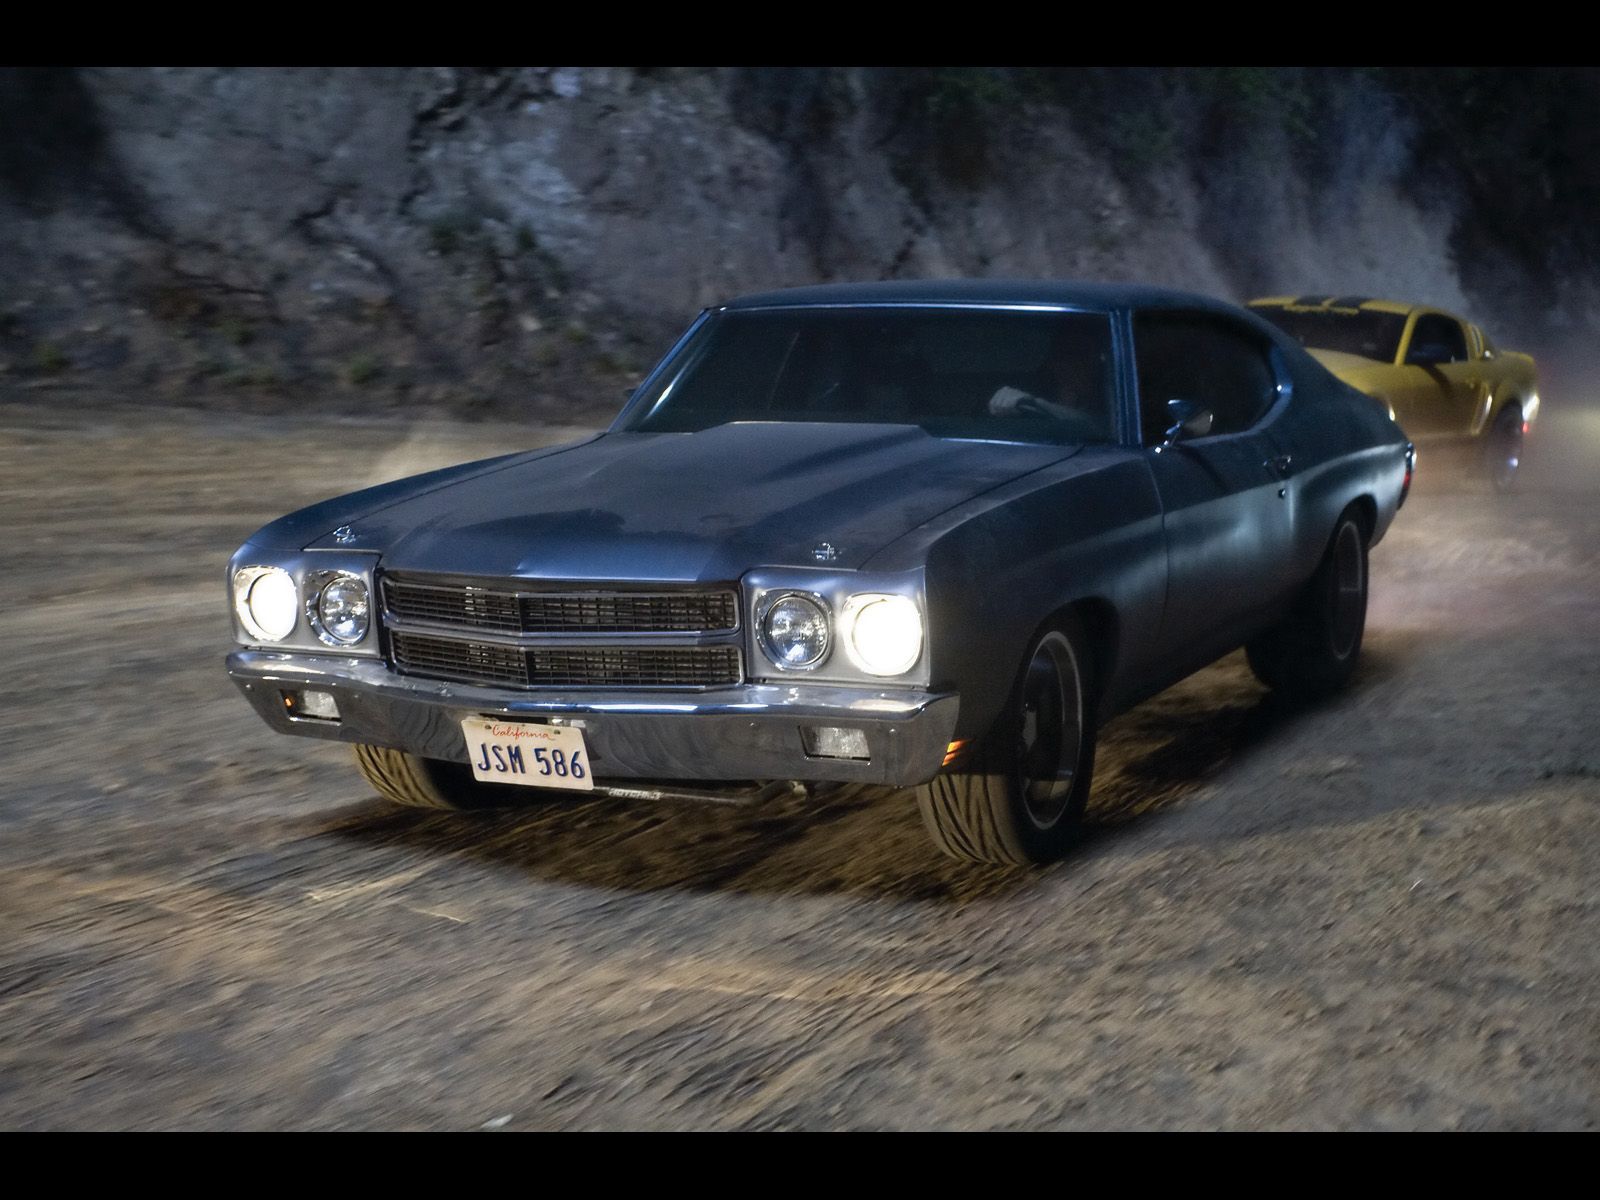 Fast & Furious Movie Cars - Chevelle - 1600x1200 - Wallpaper